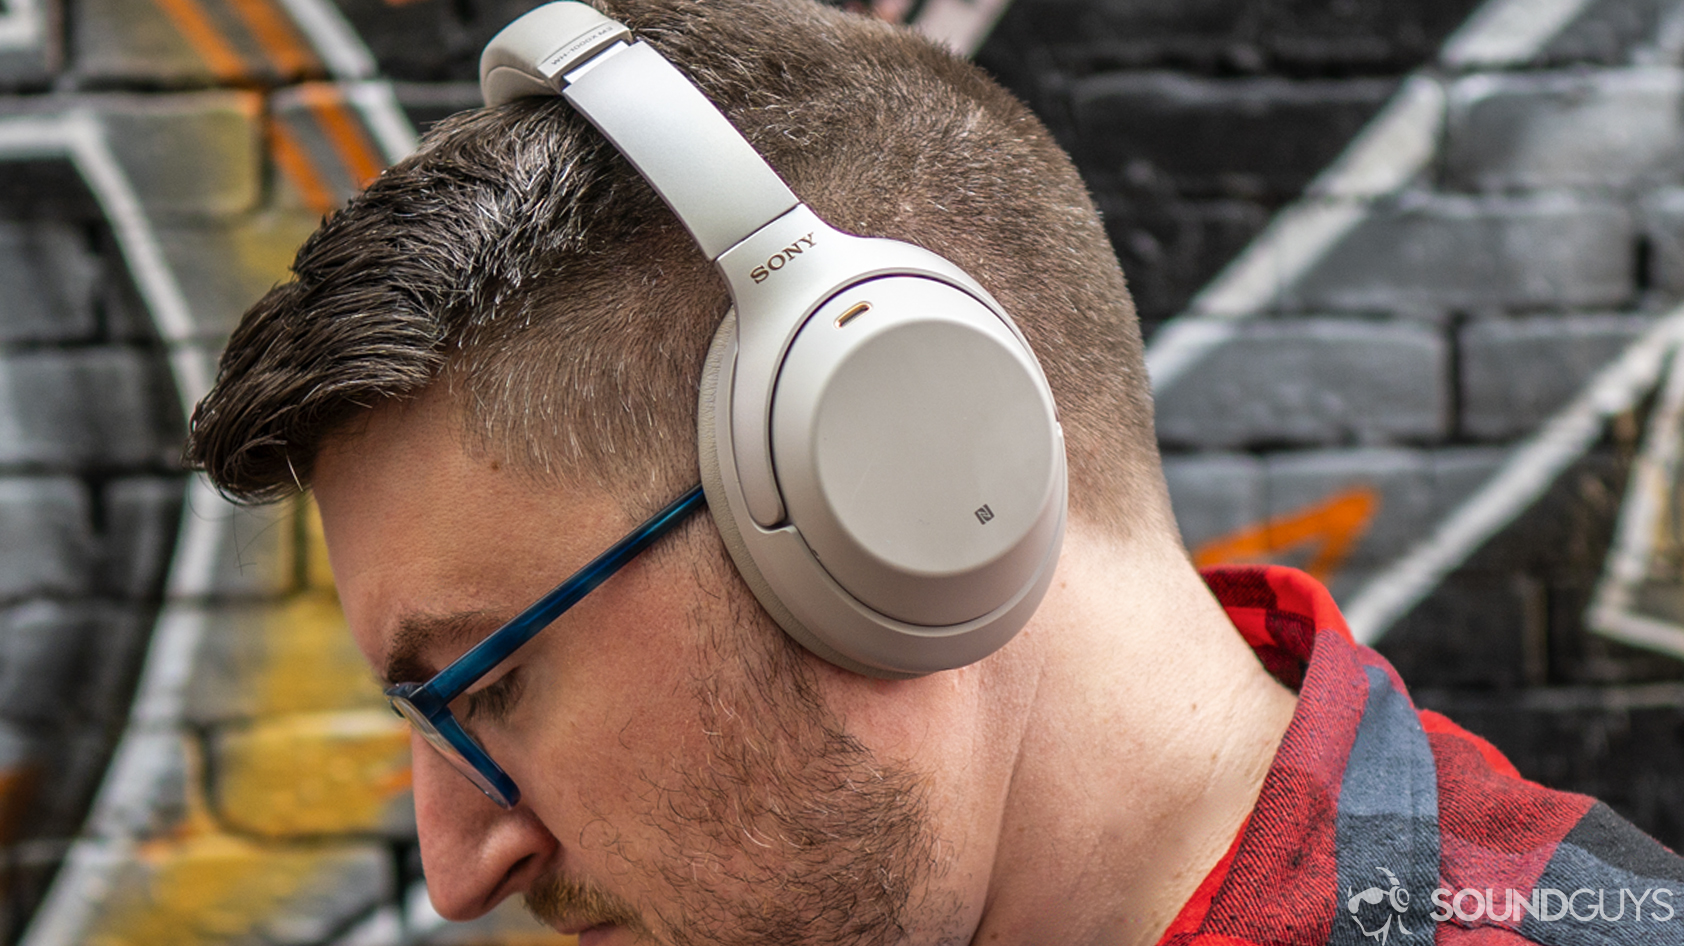 Sony WH-1000XM3 wireless Bluetooth headphones review